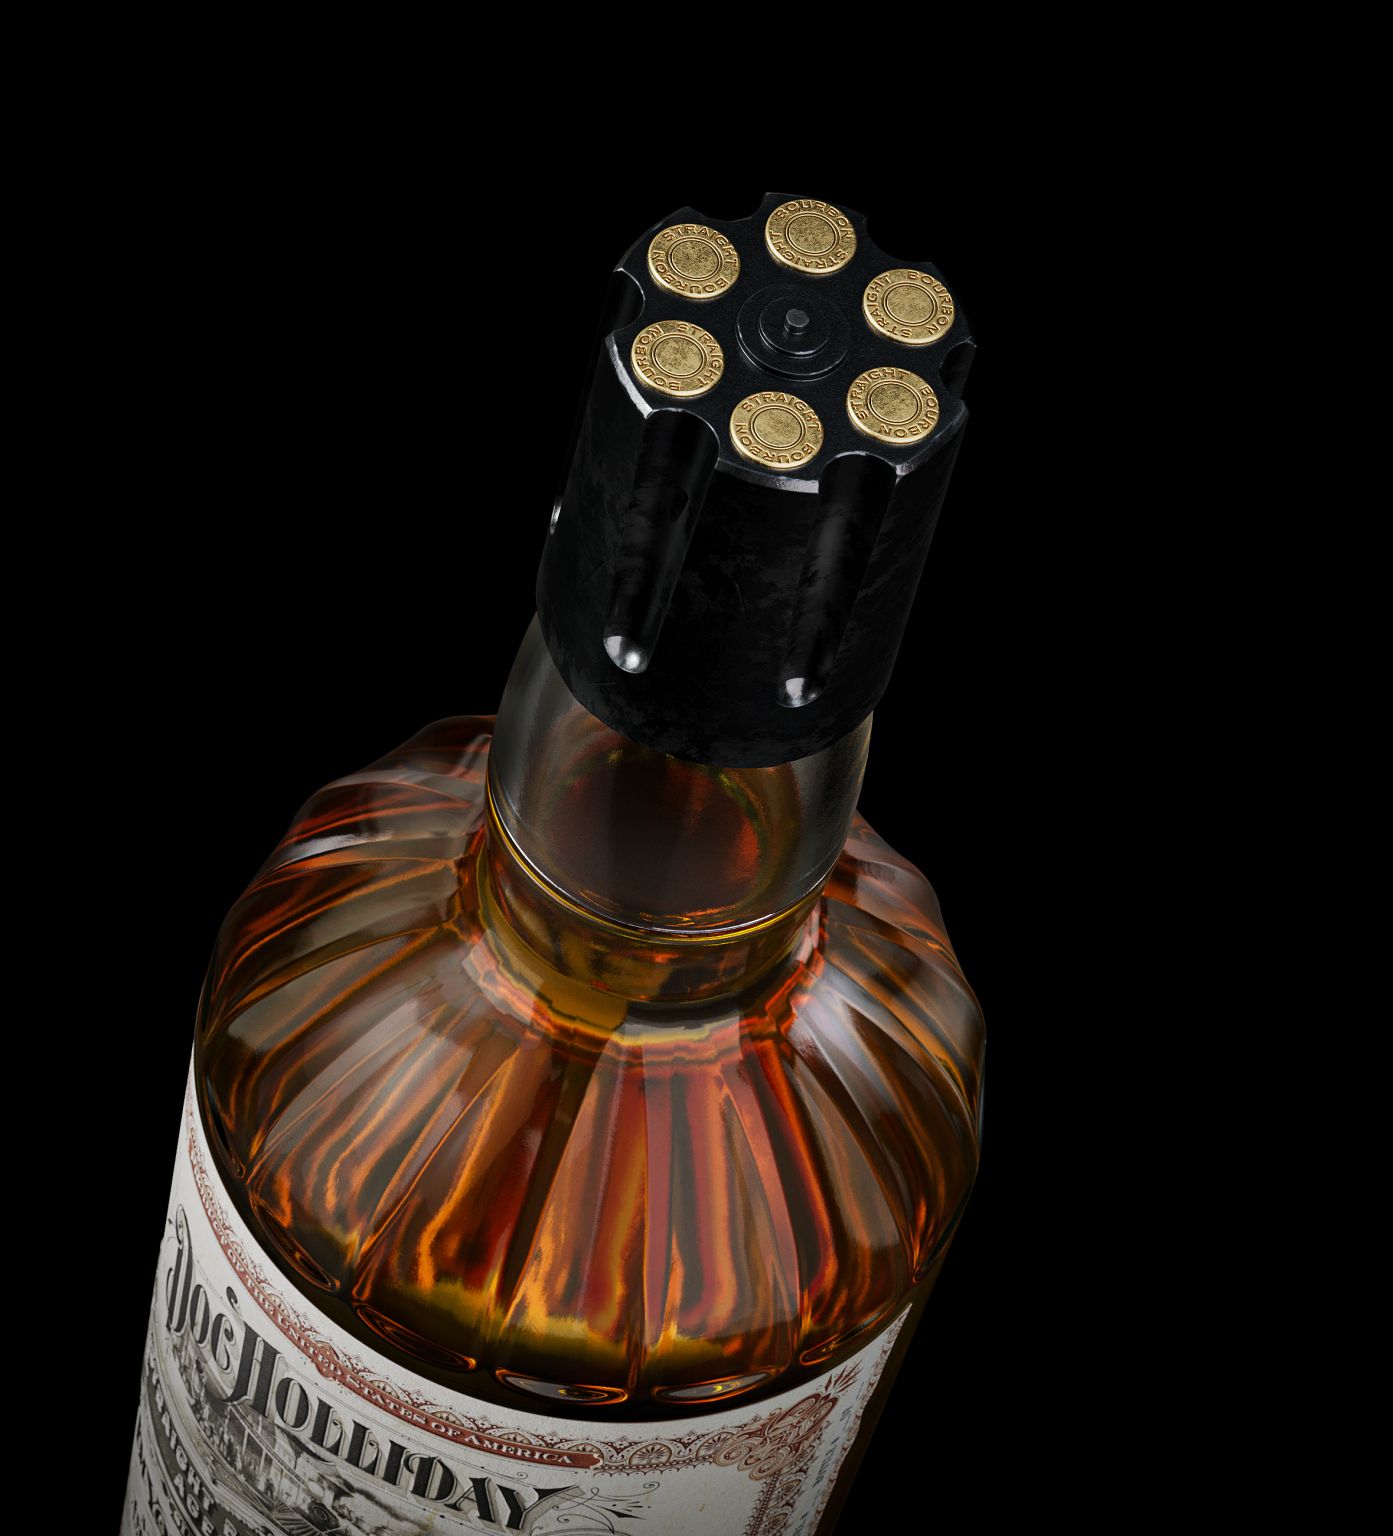 7 YO Doc Holliday Straight Bourbon Whiskey